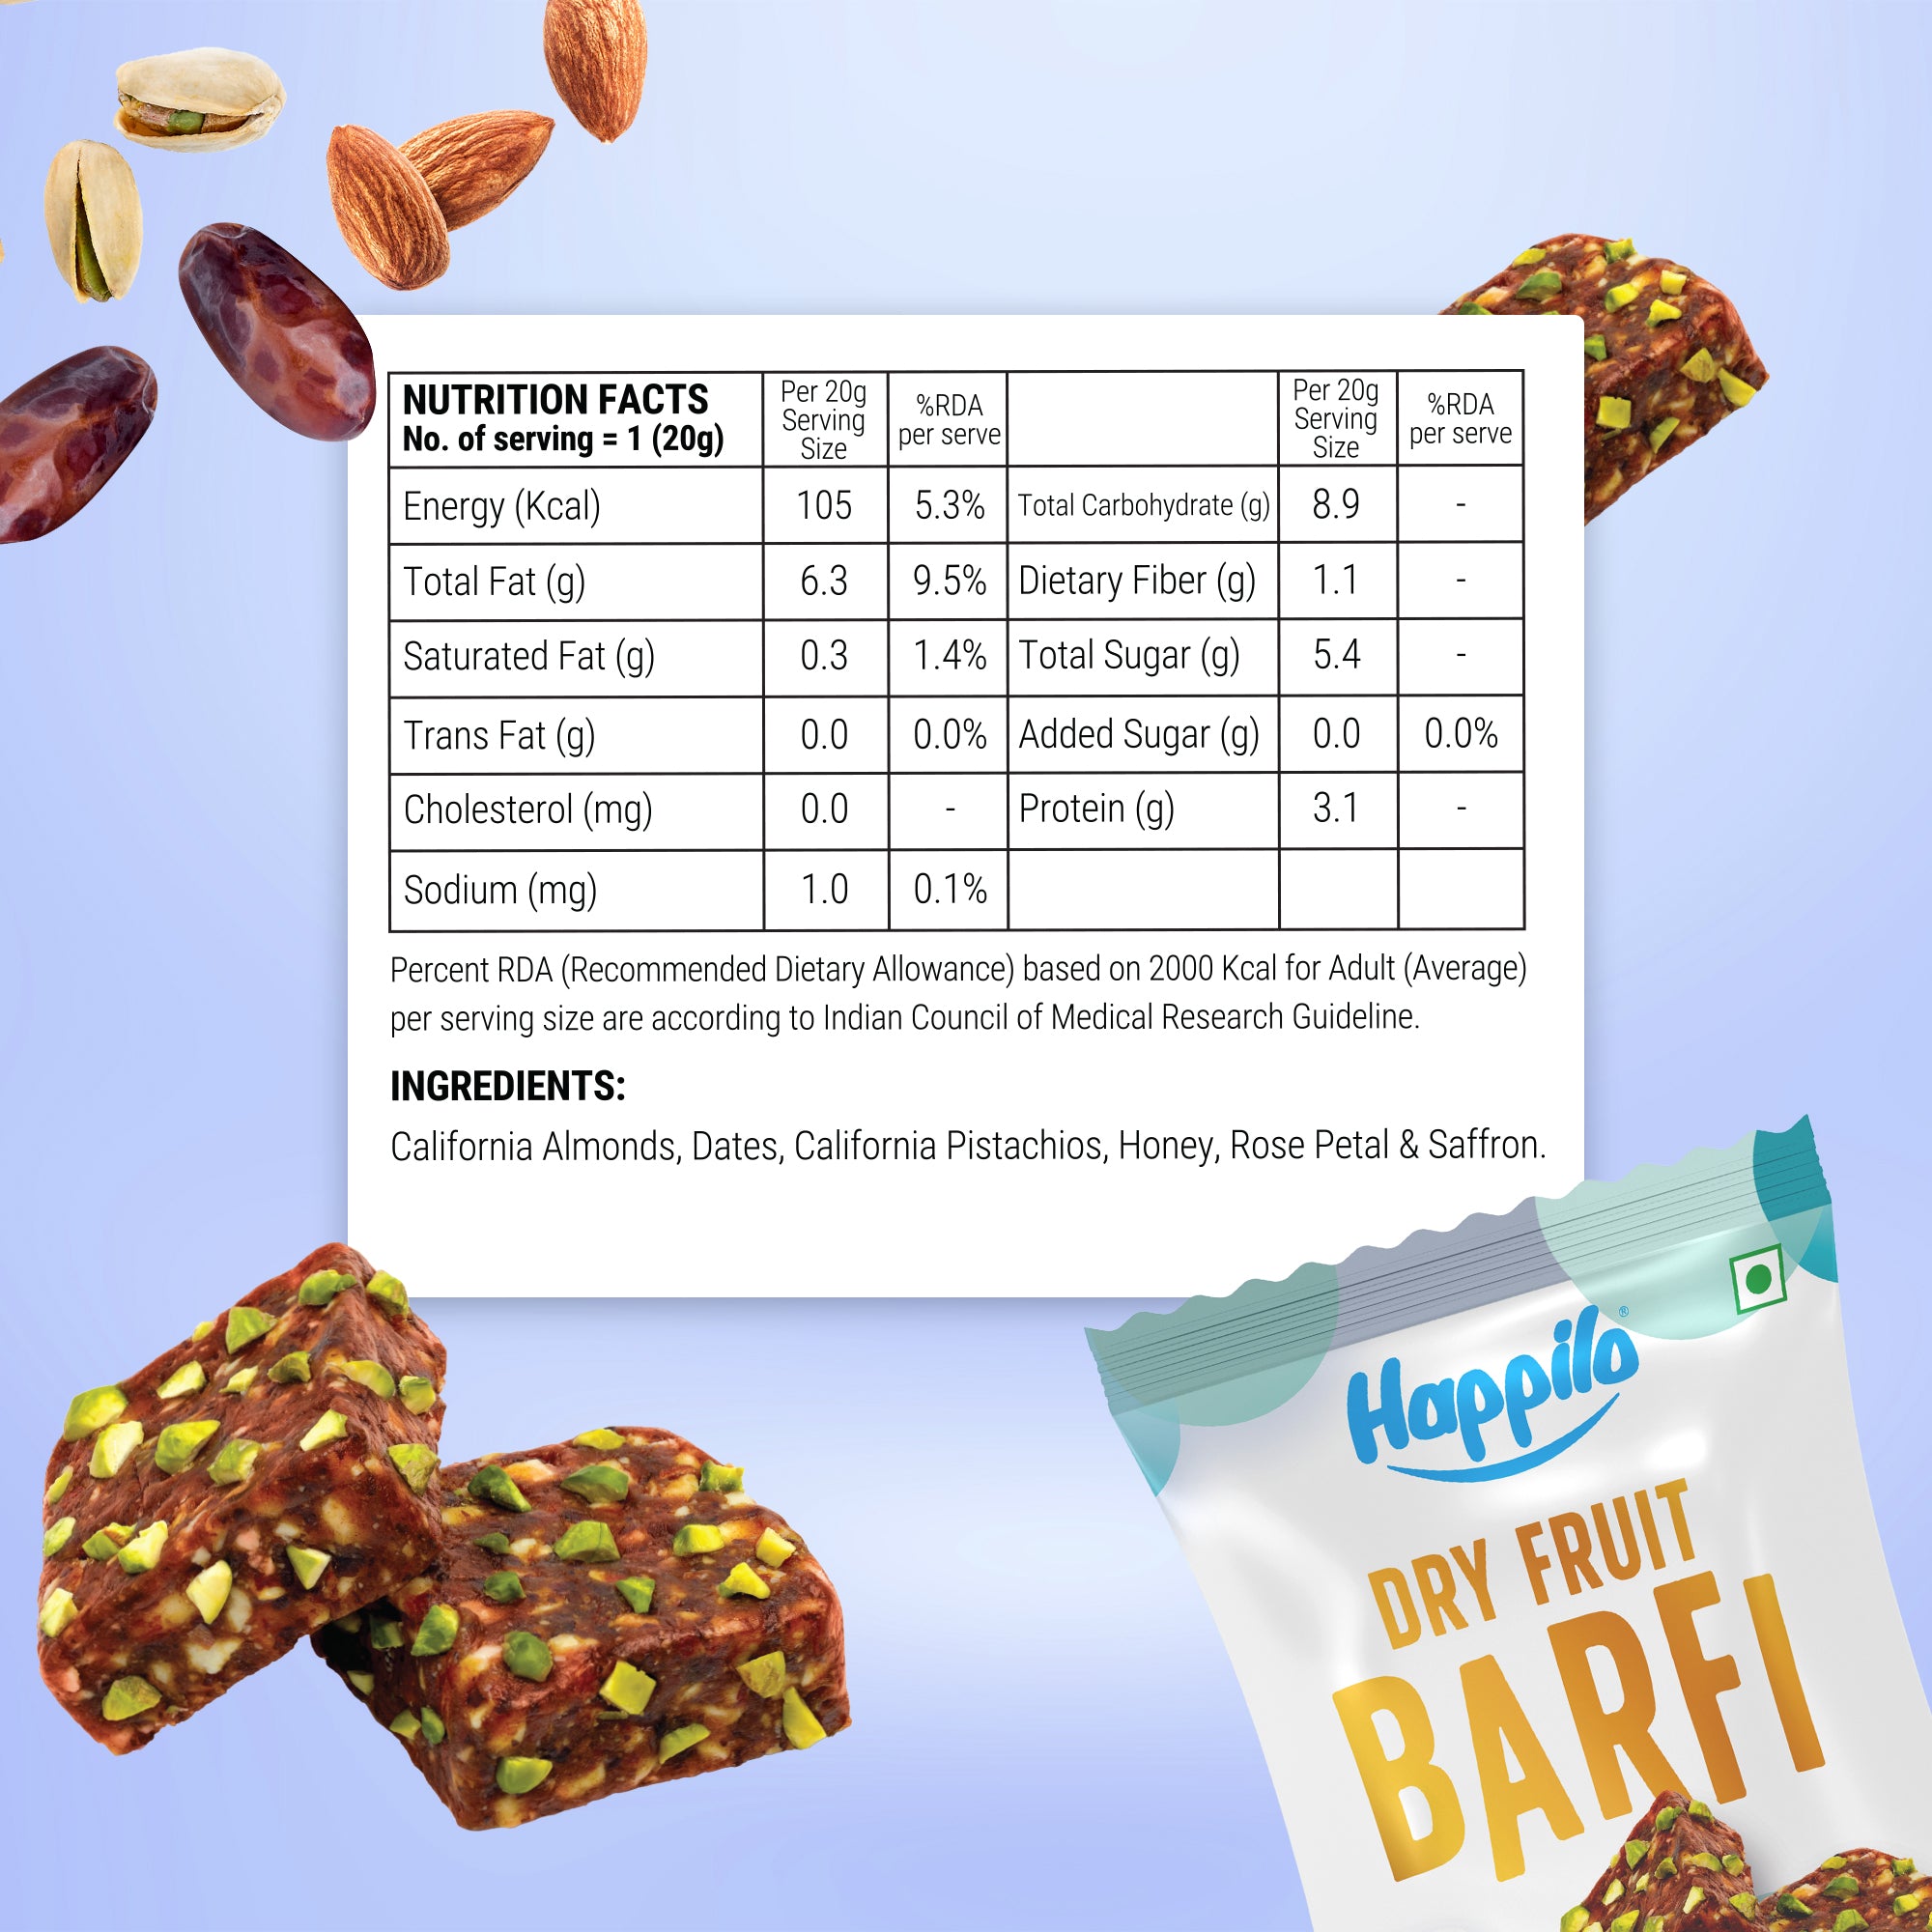 Happilo Premium Dry Fruit BarFi Box 240g (20gX12)